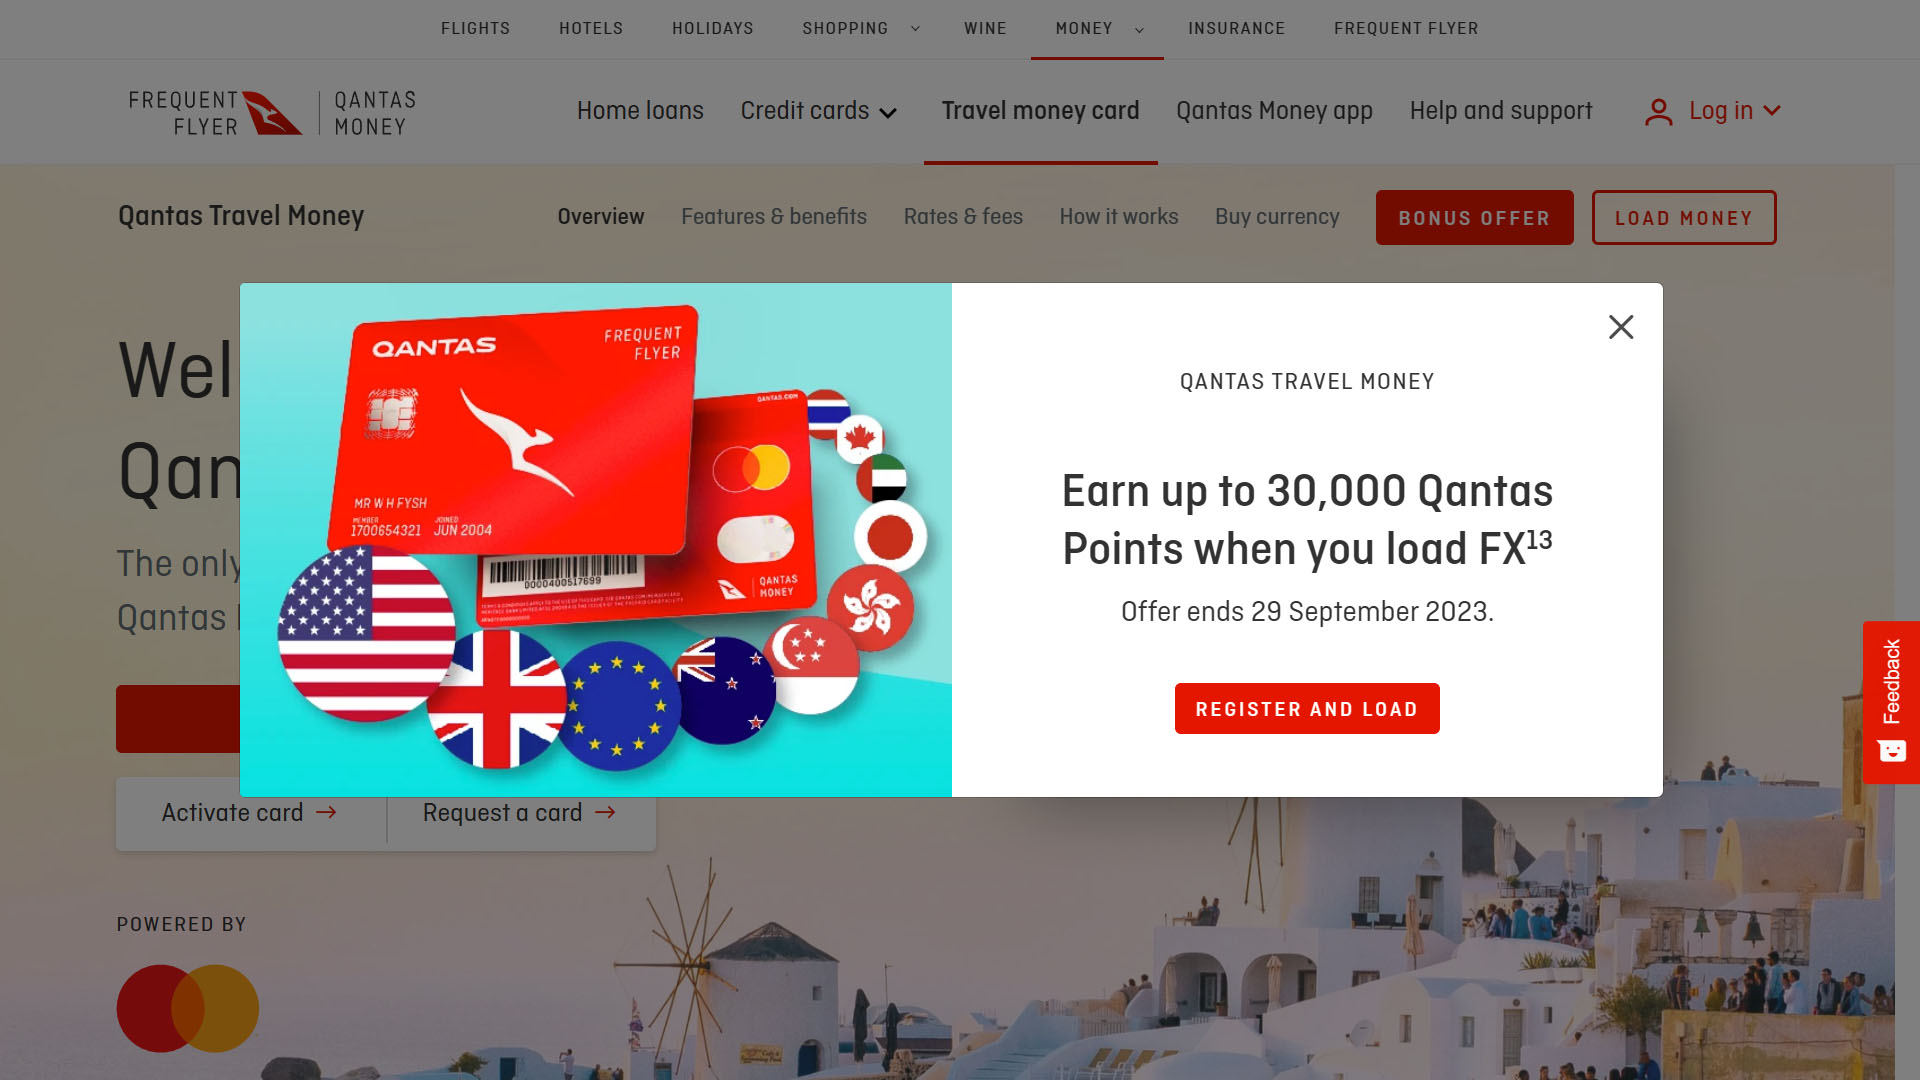 Qantas Travel Money card promotion, earn up to 30,000 bonus Qantas Points